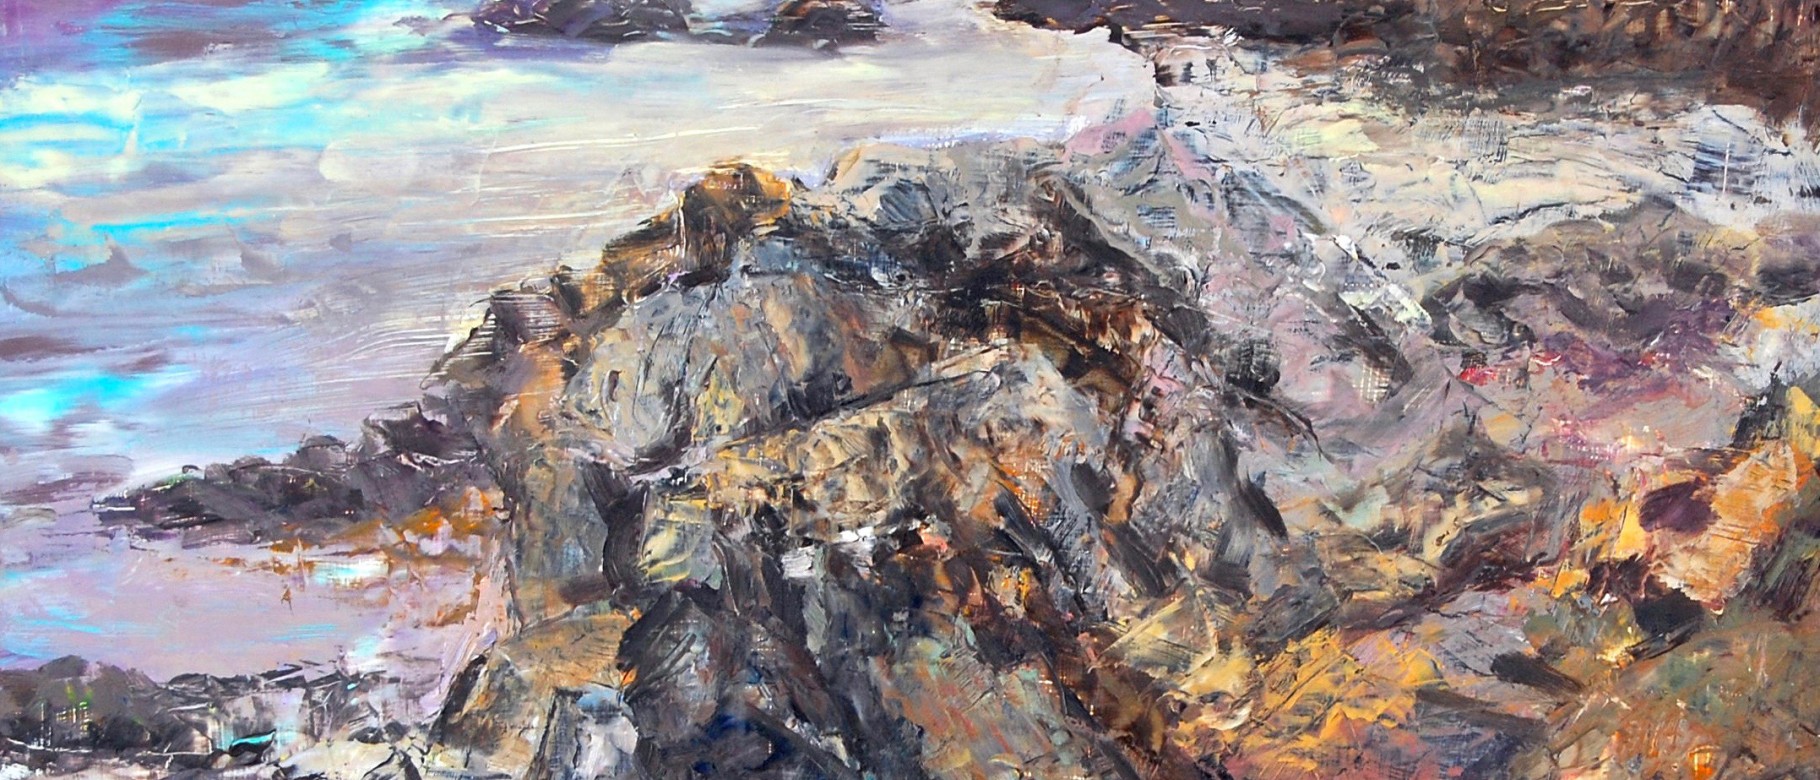 'Big Rock' by Charles Thompson